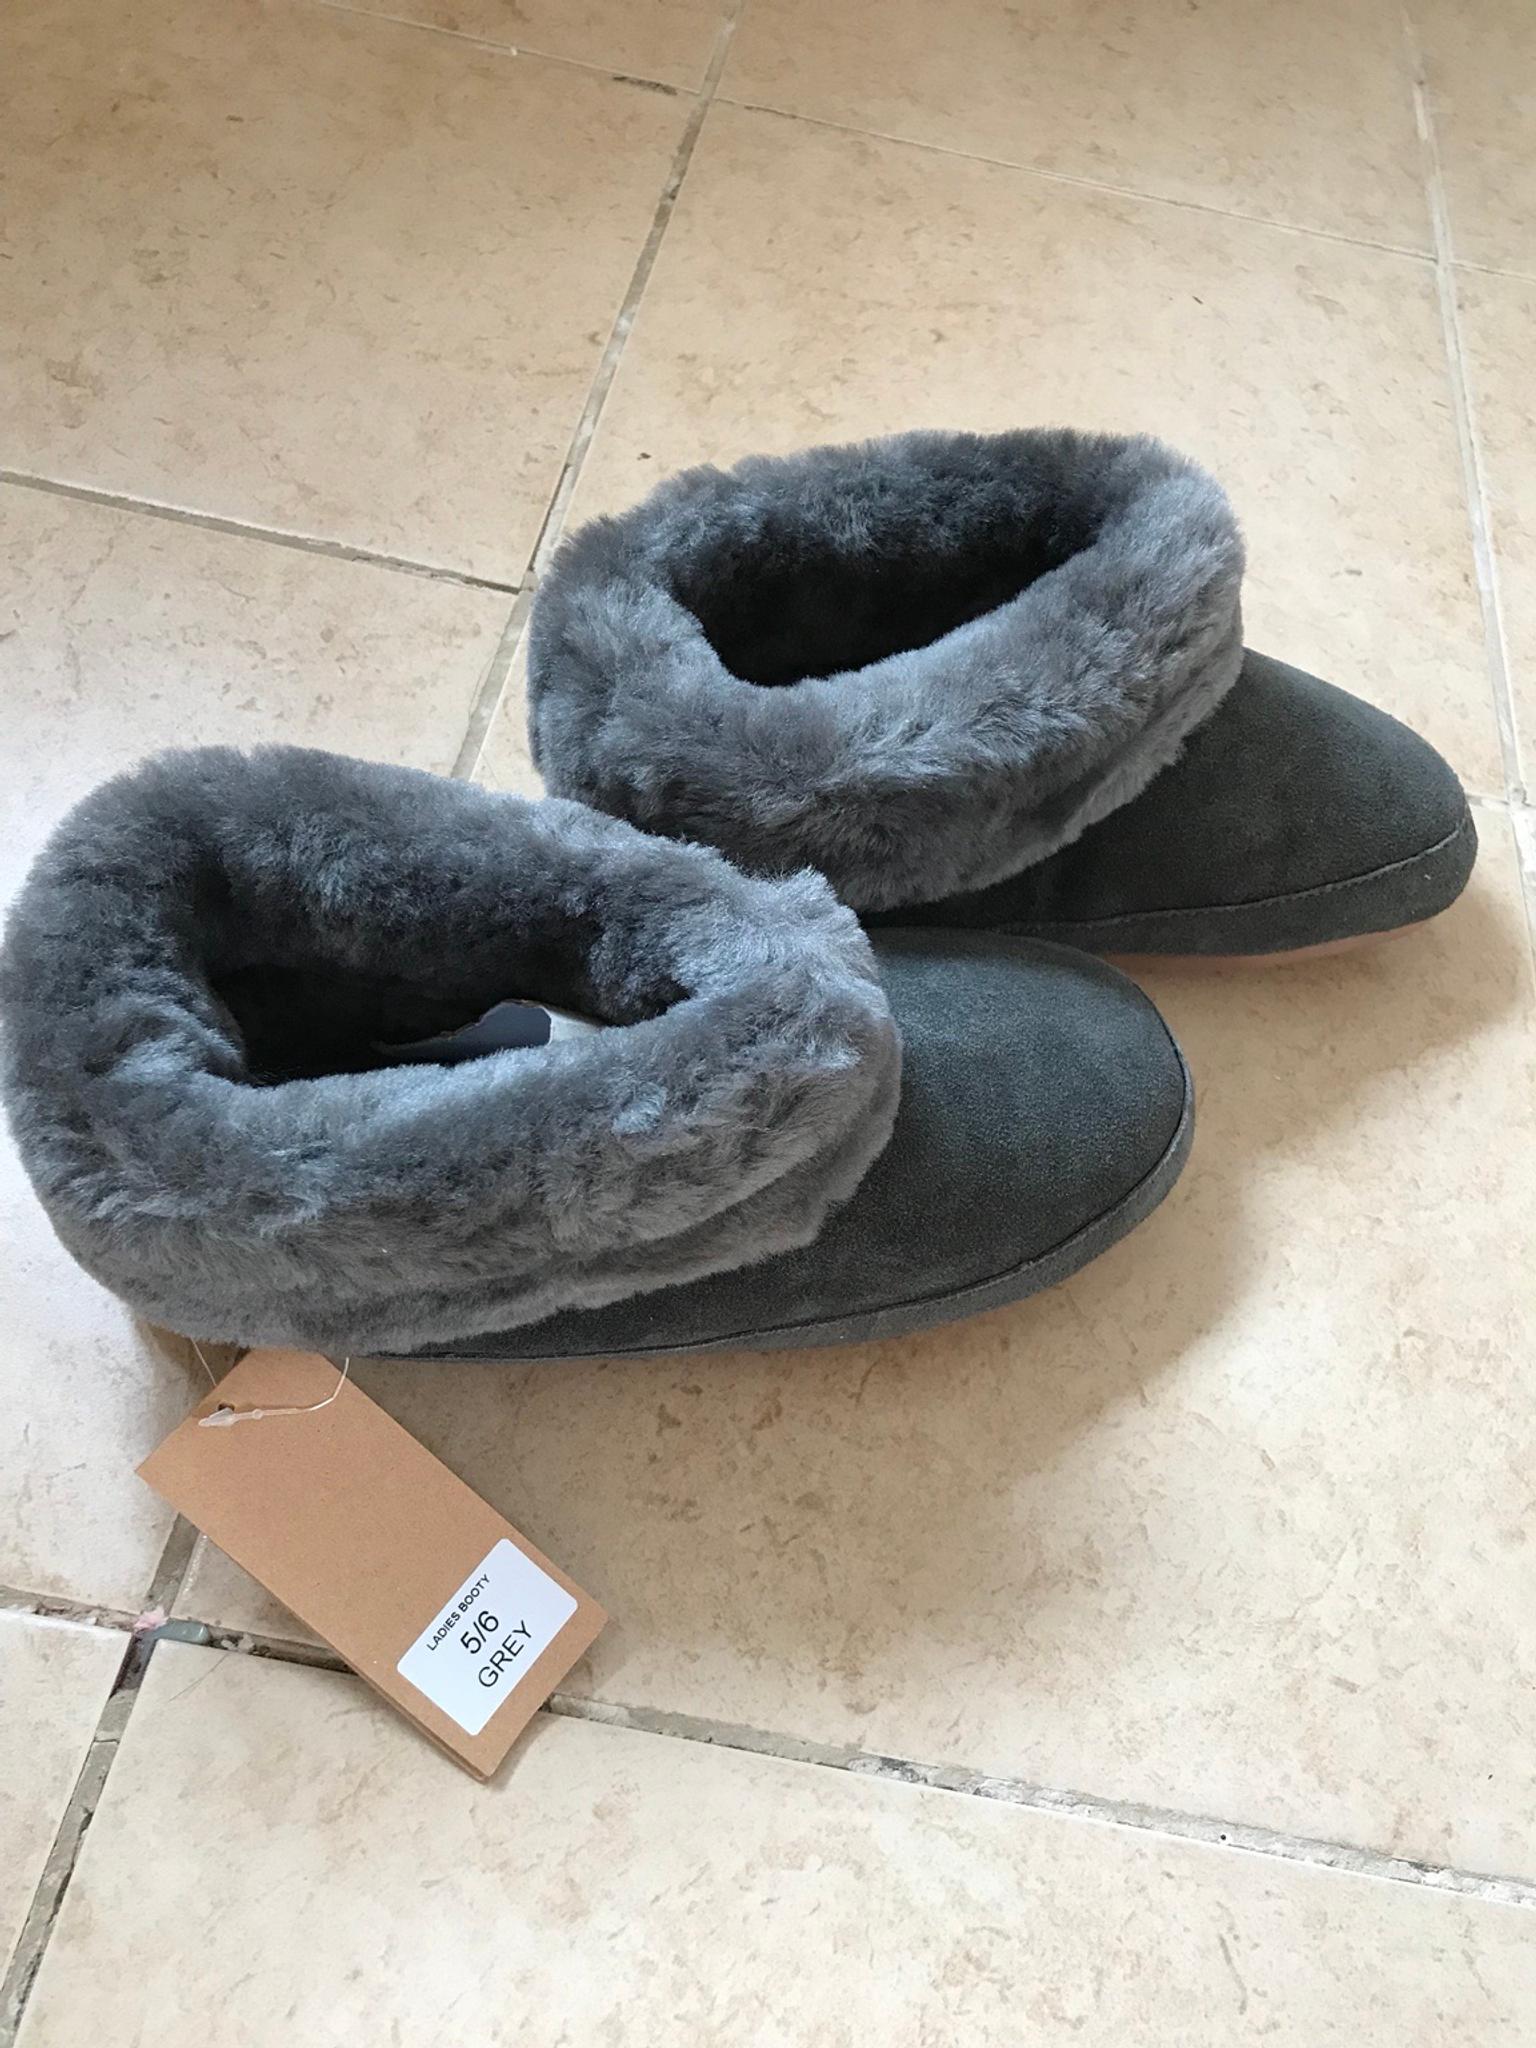 fenland slippers